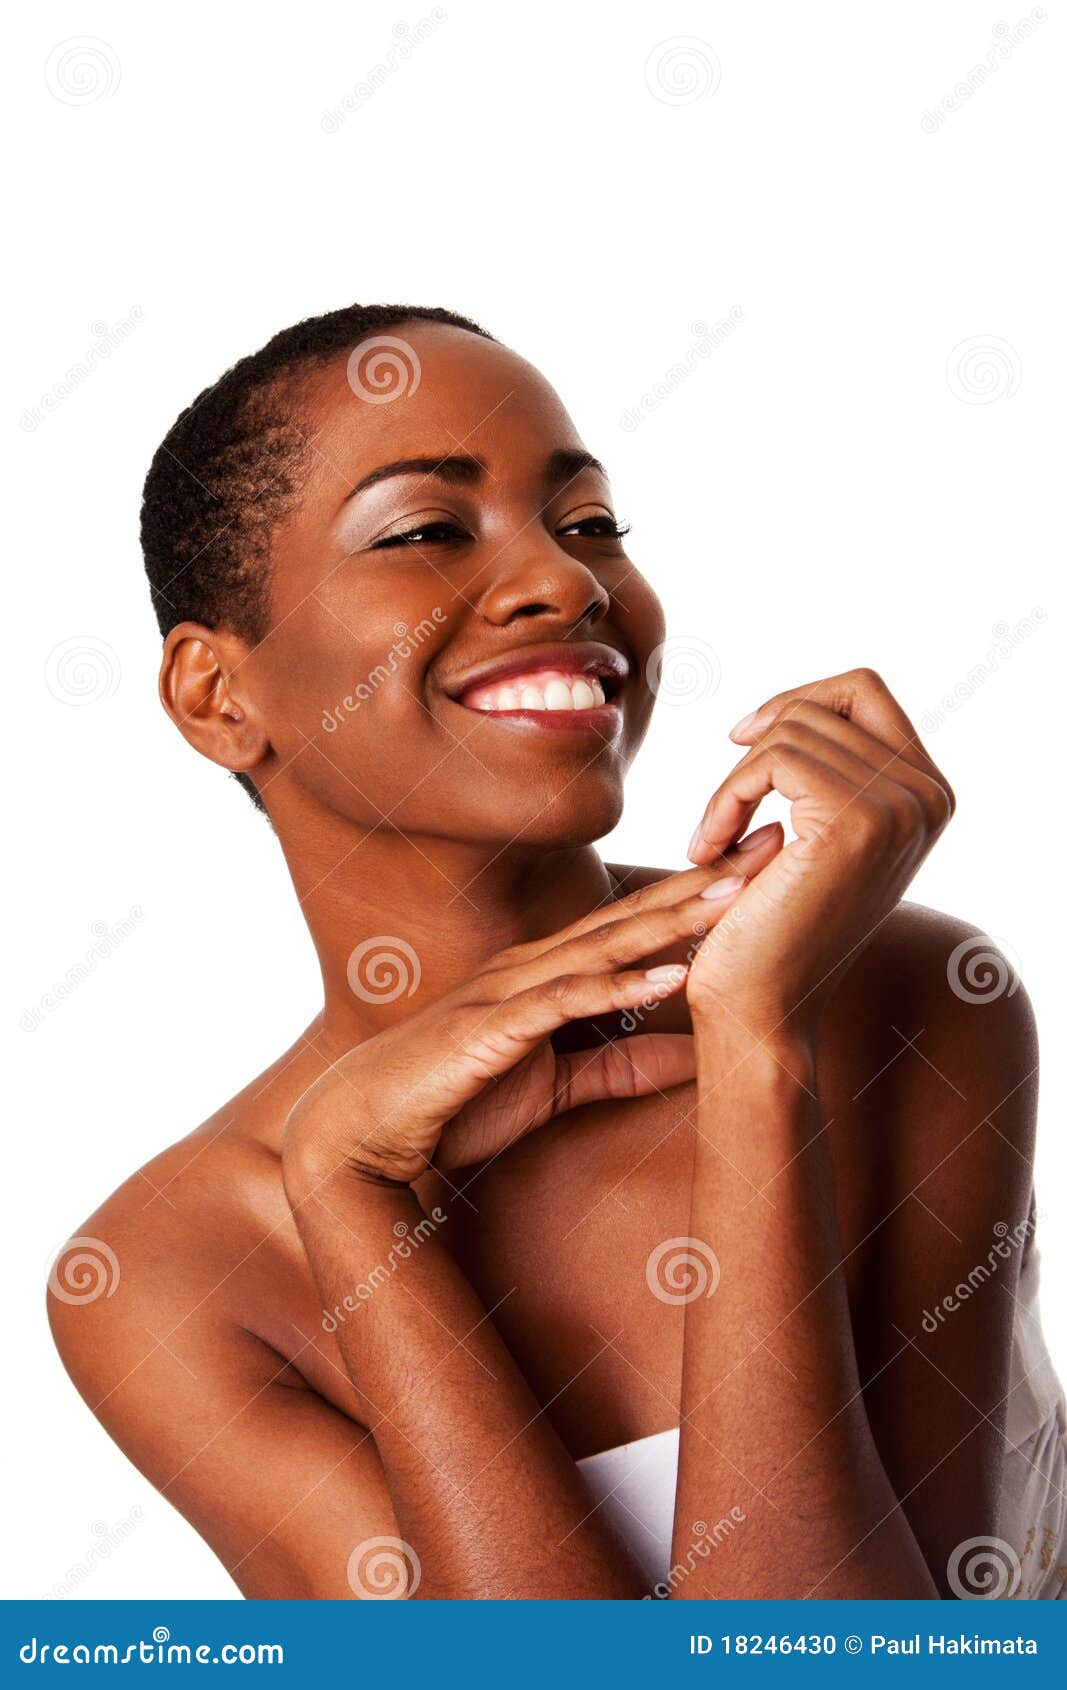 beautiful happy smiling inspiring african woman